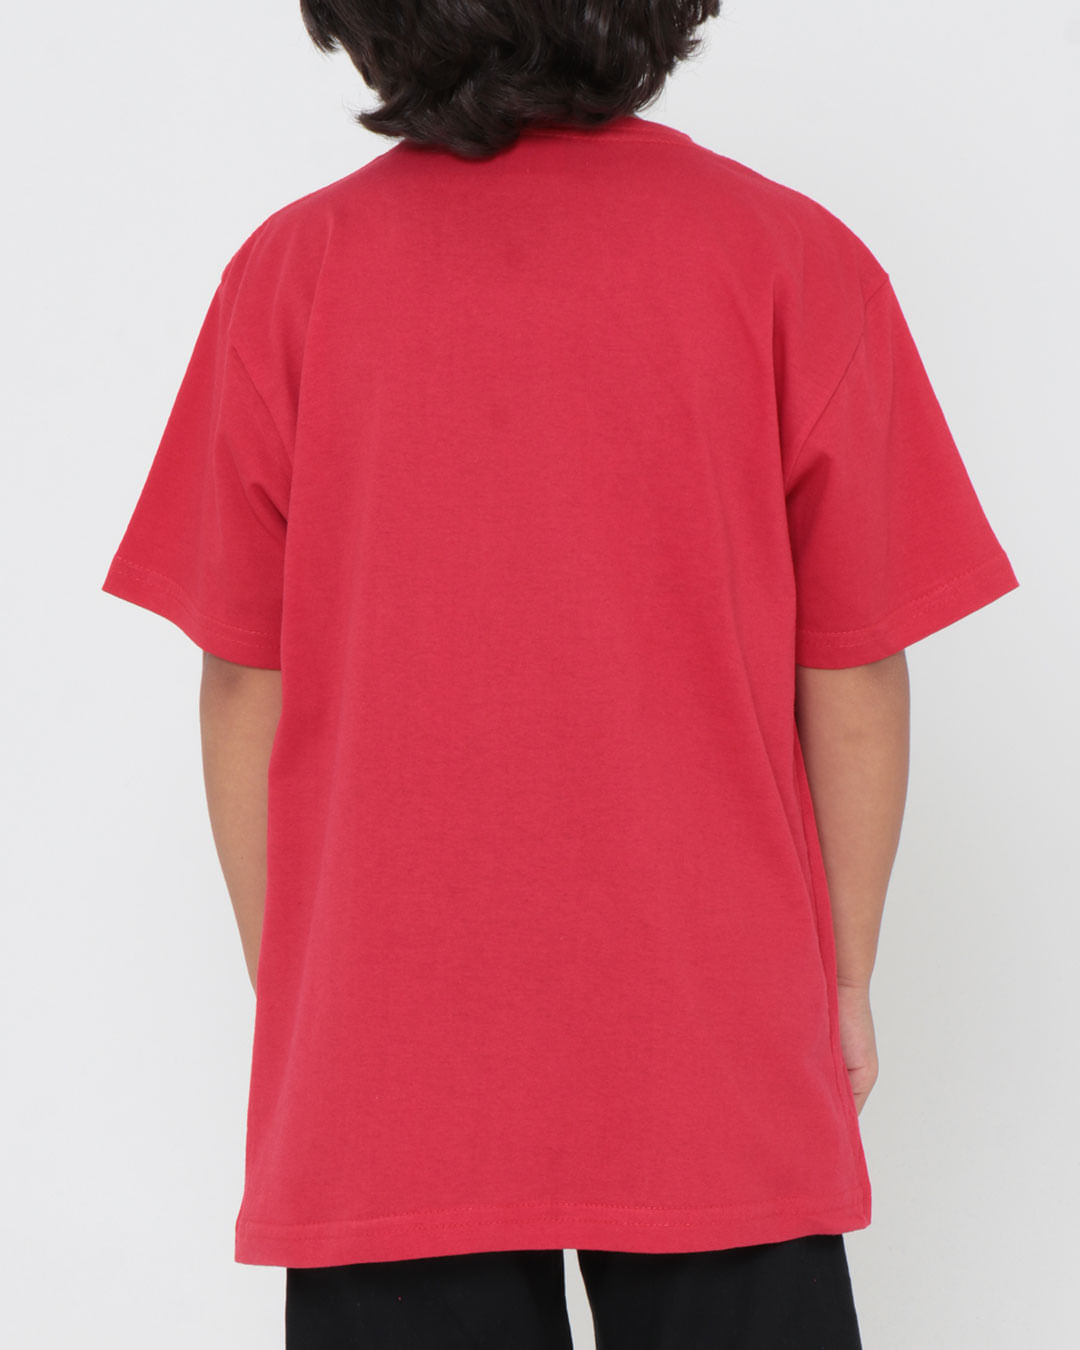 Camiseta-25029-Mc-M412-Hferro---Vermelho-Medio